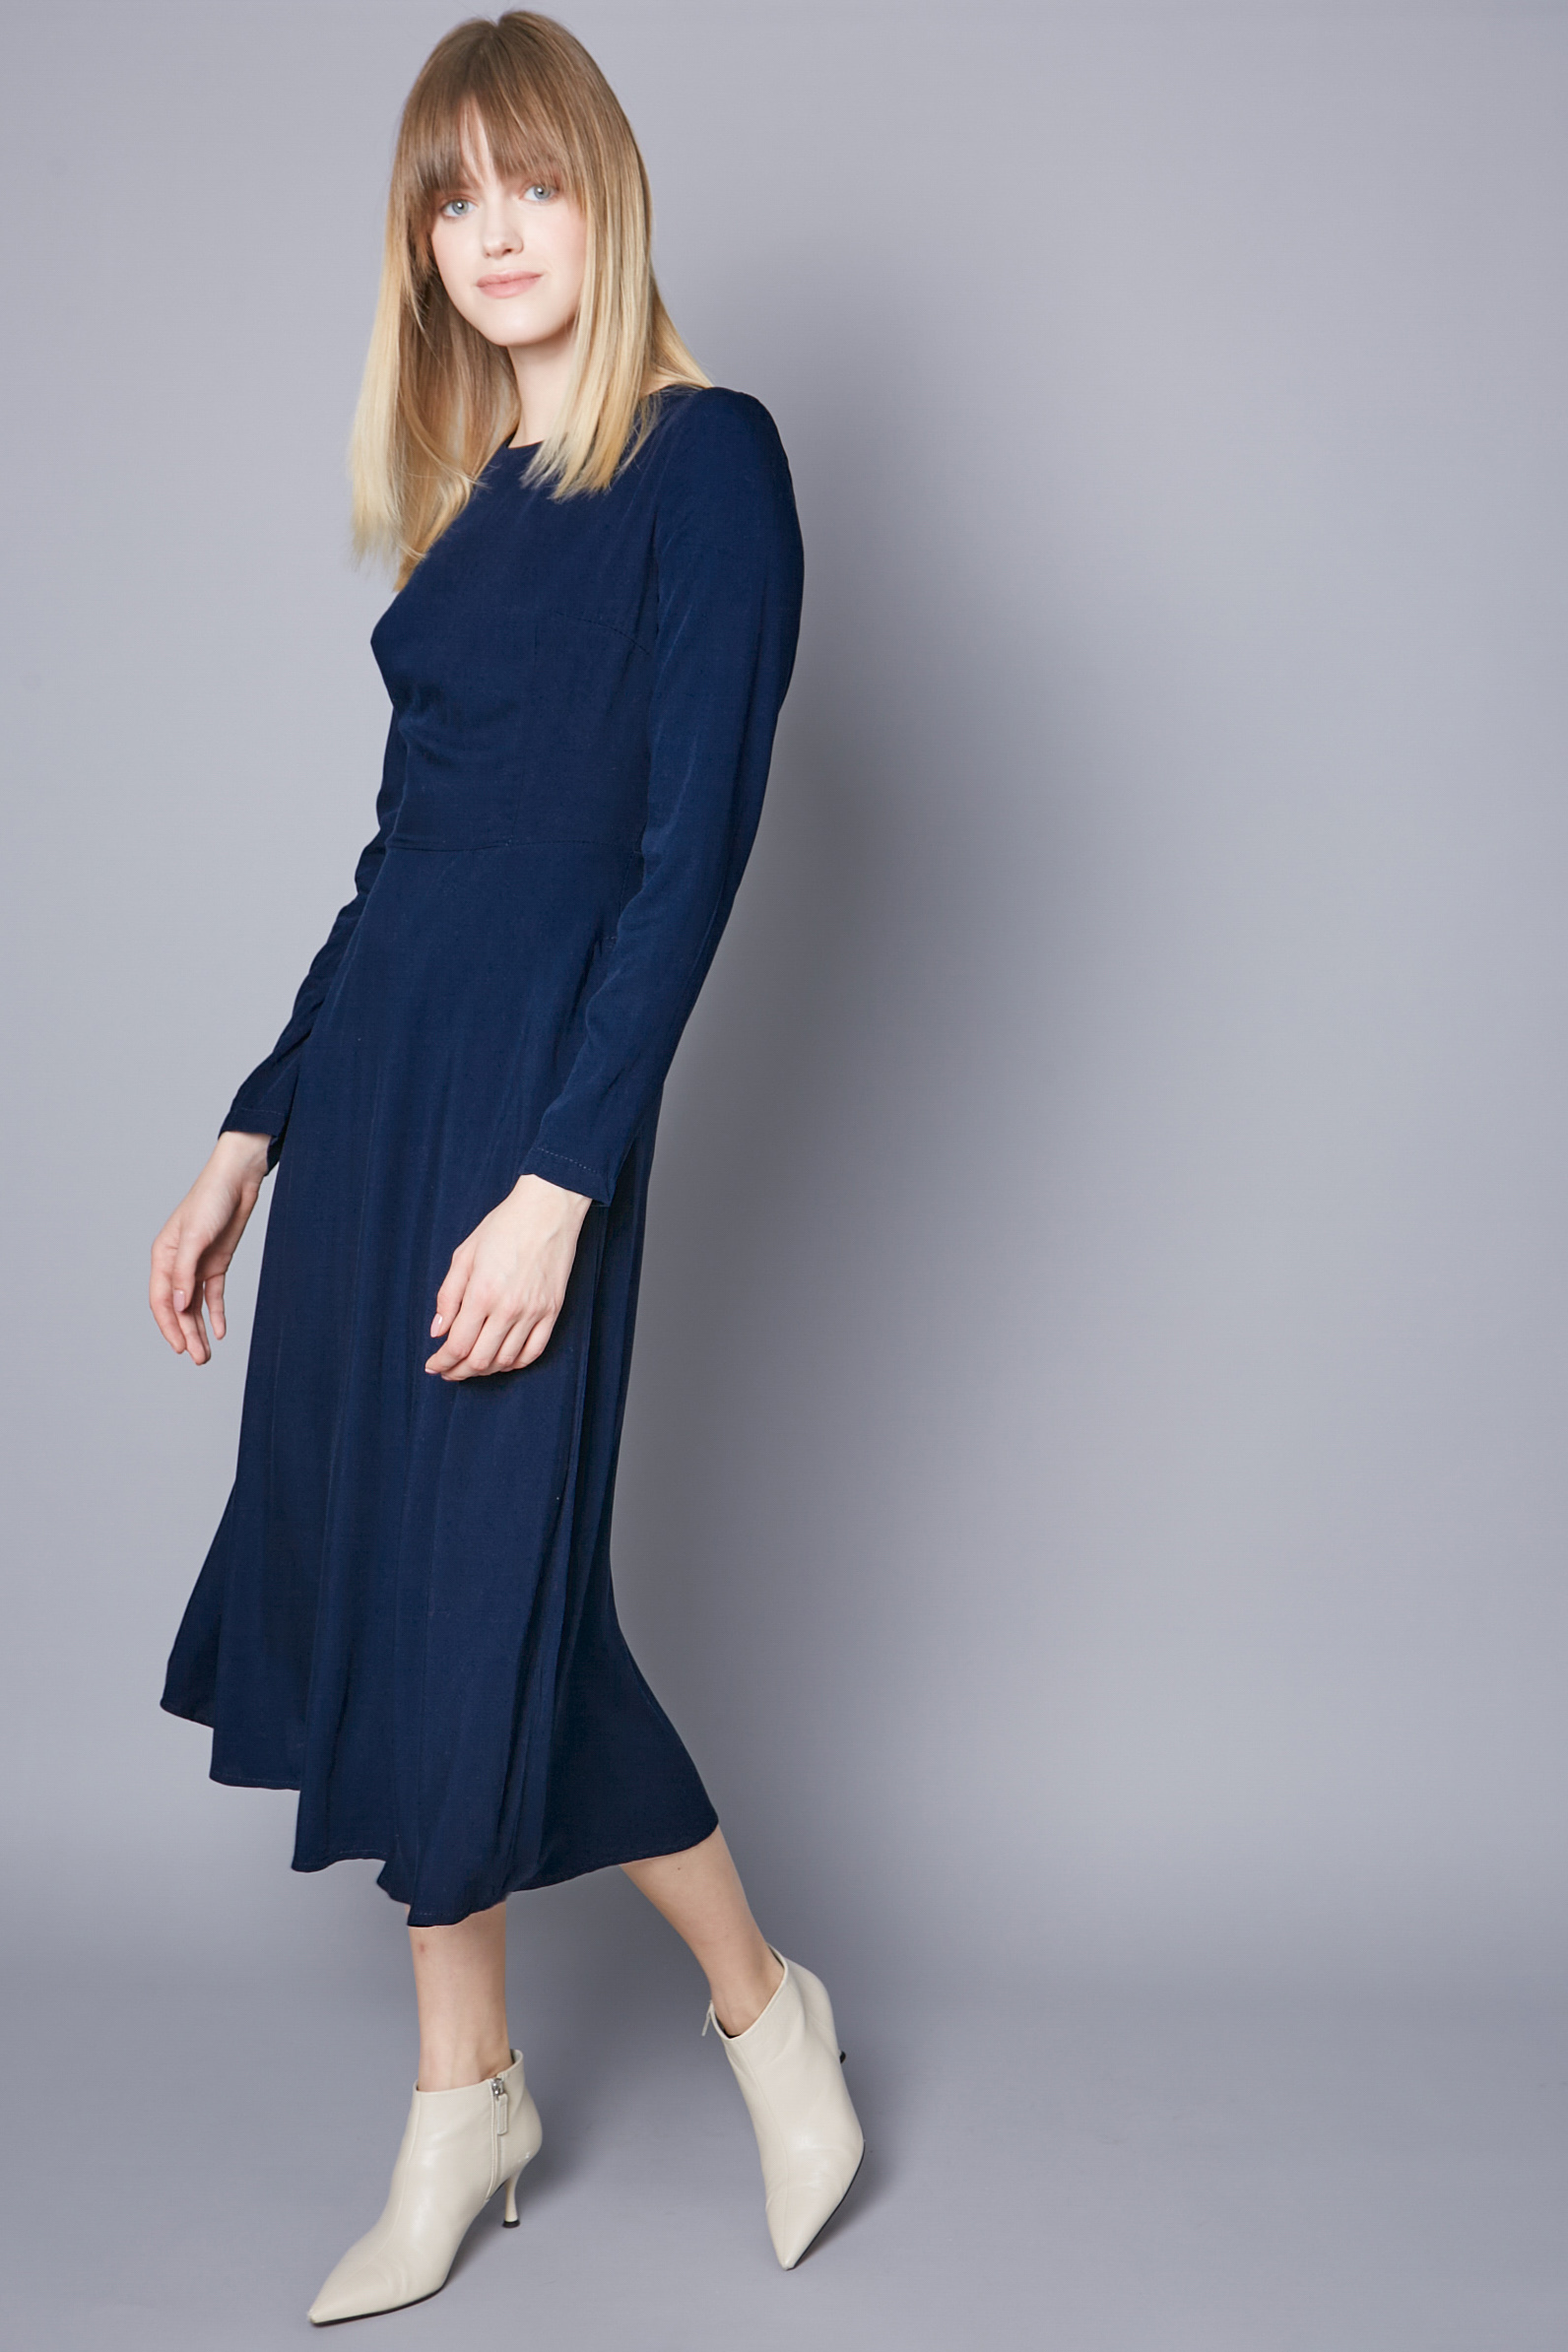 Blue midi dress with long sleeves, photo 2